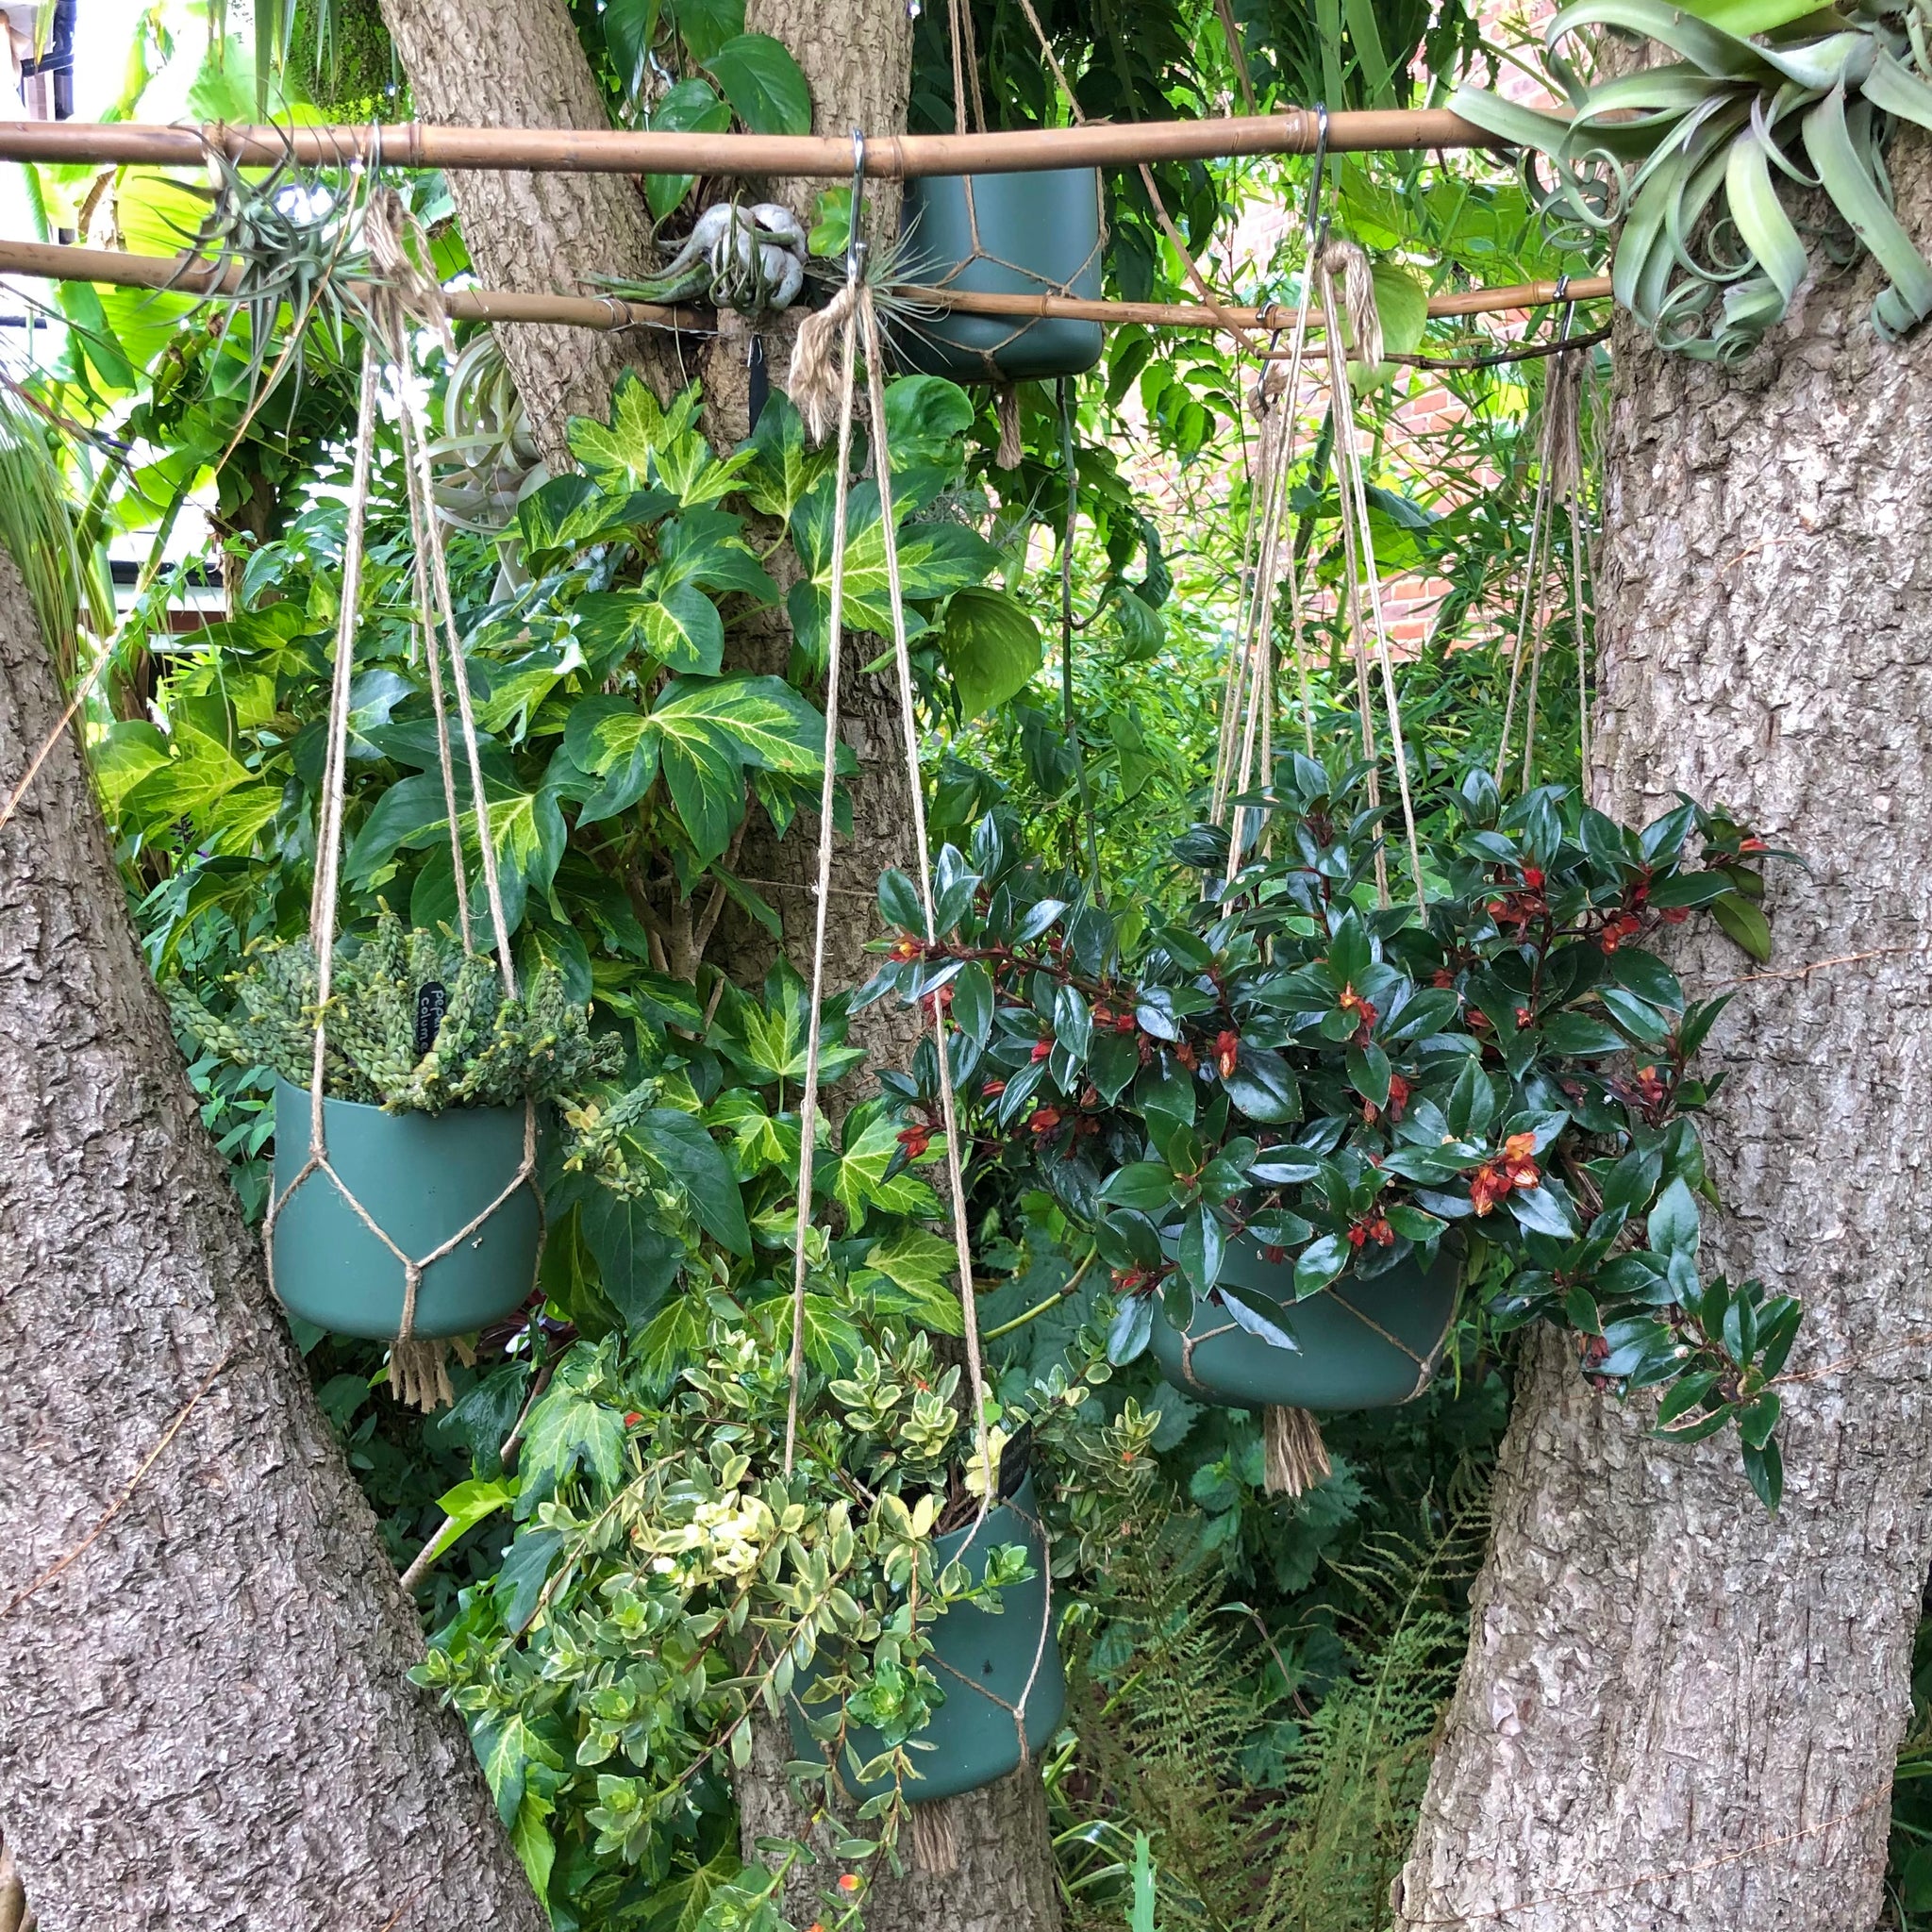 Hanging houseplants spending the summer outside.